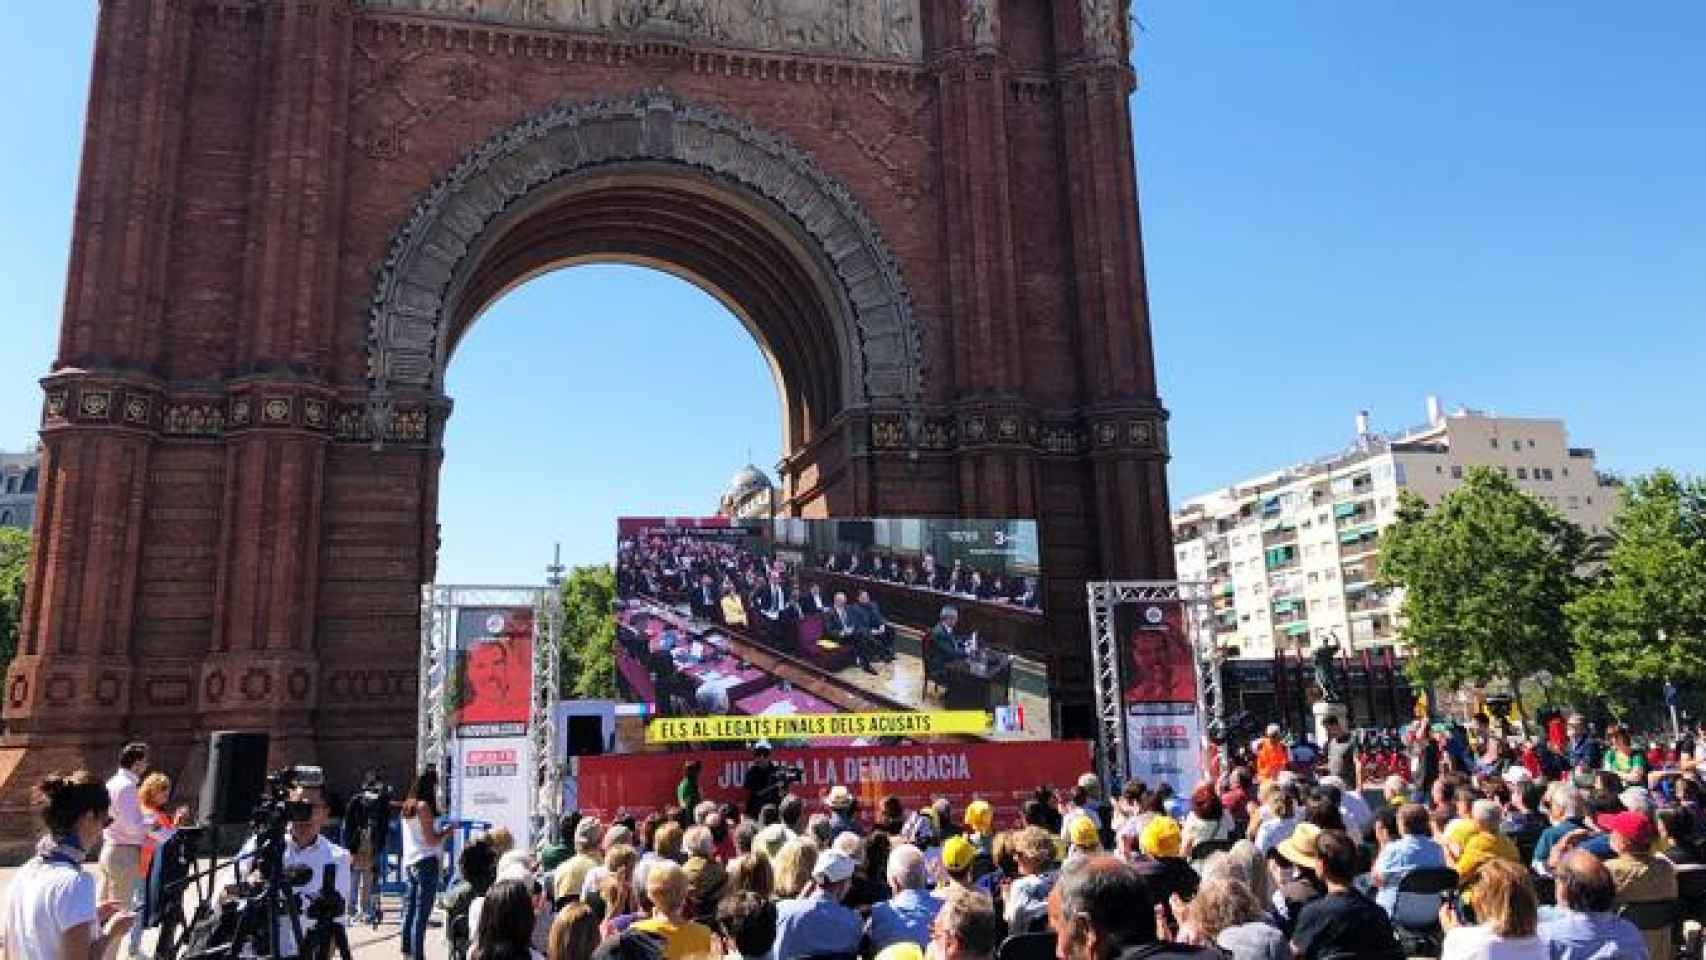 Imagen de la pantalla gigante de Òmnium Cultural en el Arco de Triunfo de Barcelona / CG